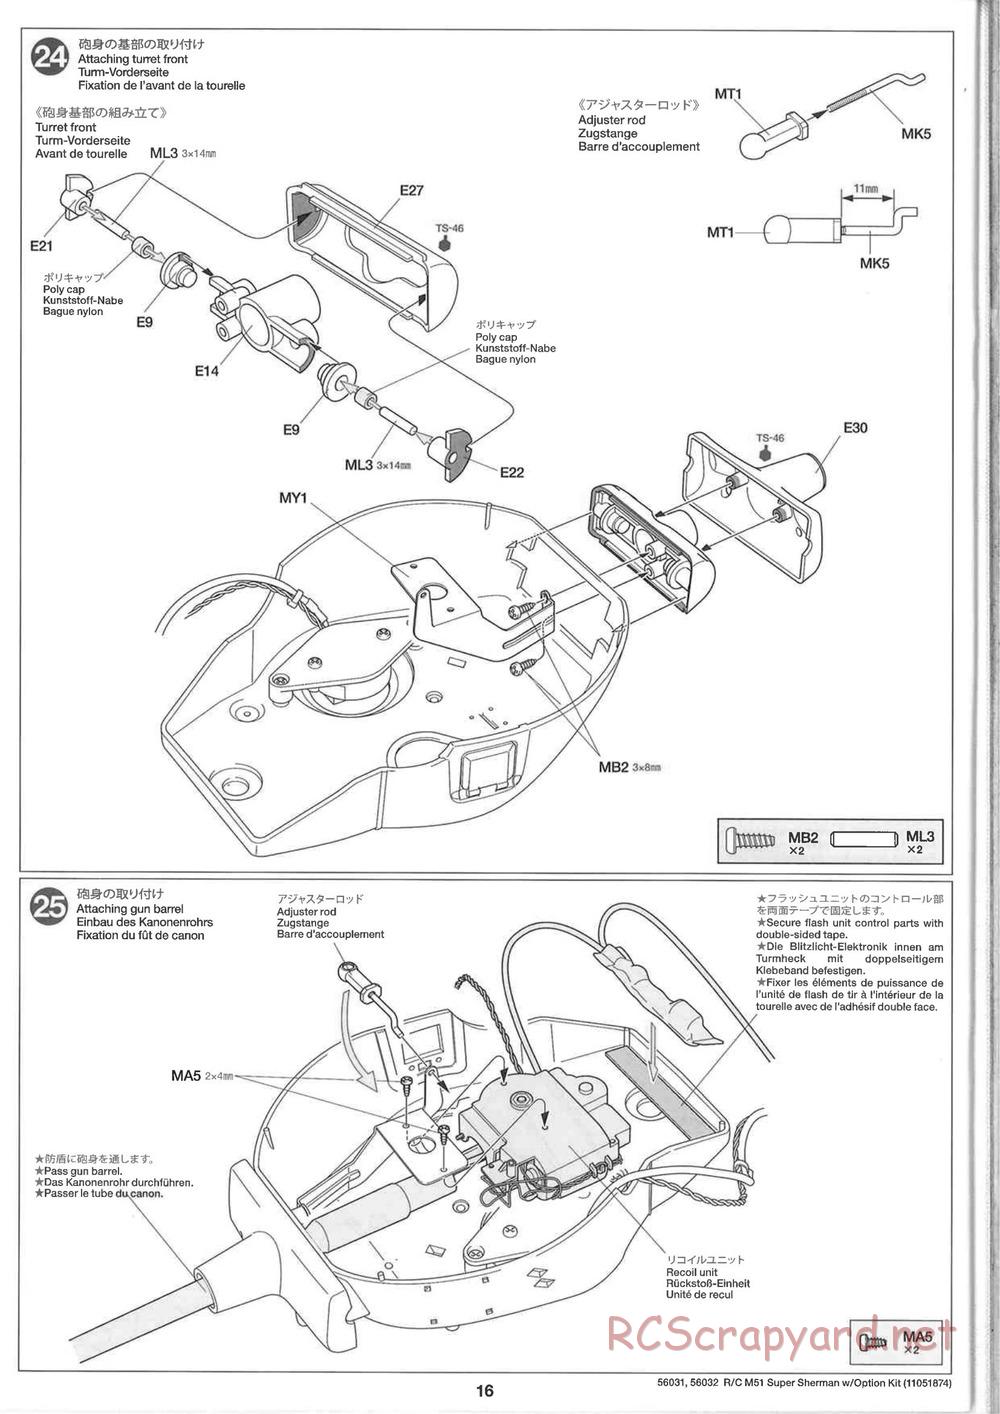 Tamiya - Super Sherman M-51 - 1/16 Scale Chassis - Manual - Page 16